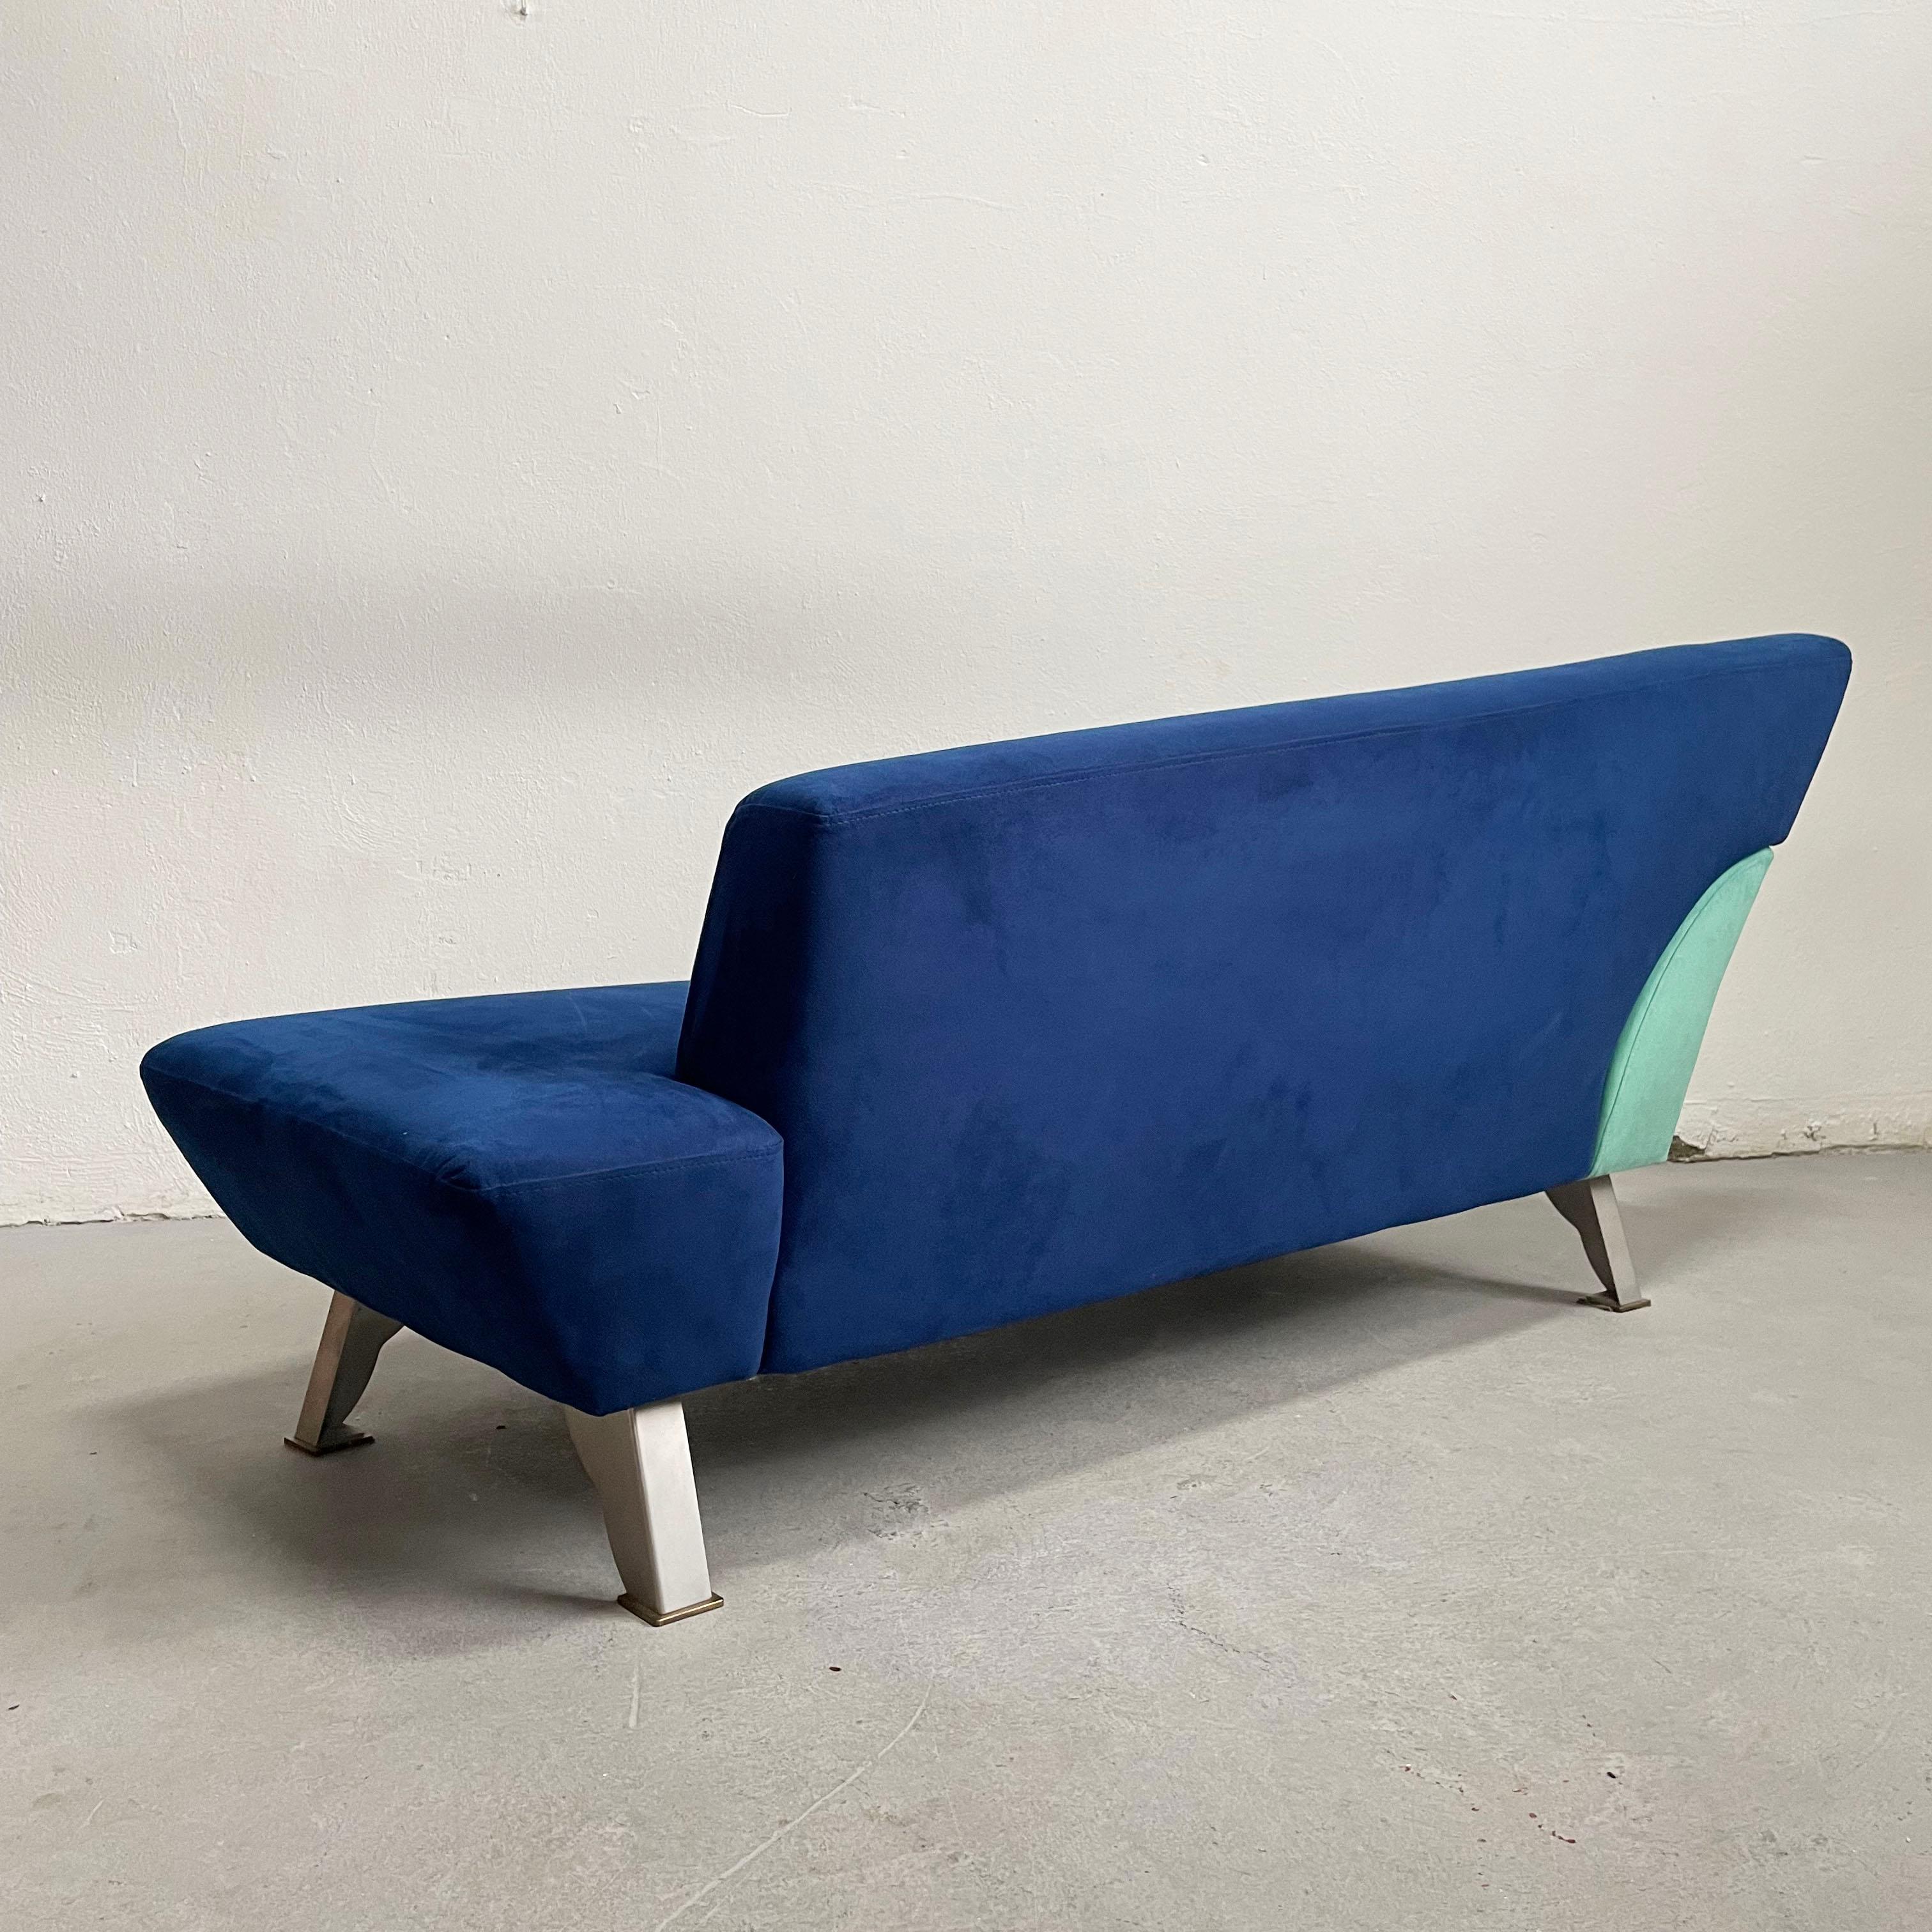 Late 20th Century Memphis Style Italian 2-Seat Sofa in Blue Alcantara Fabric, Postmodern, 1980s For Sale